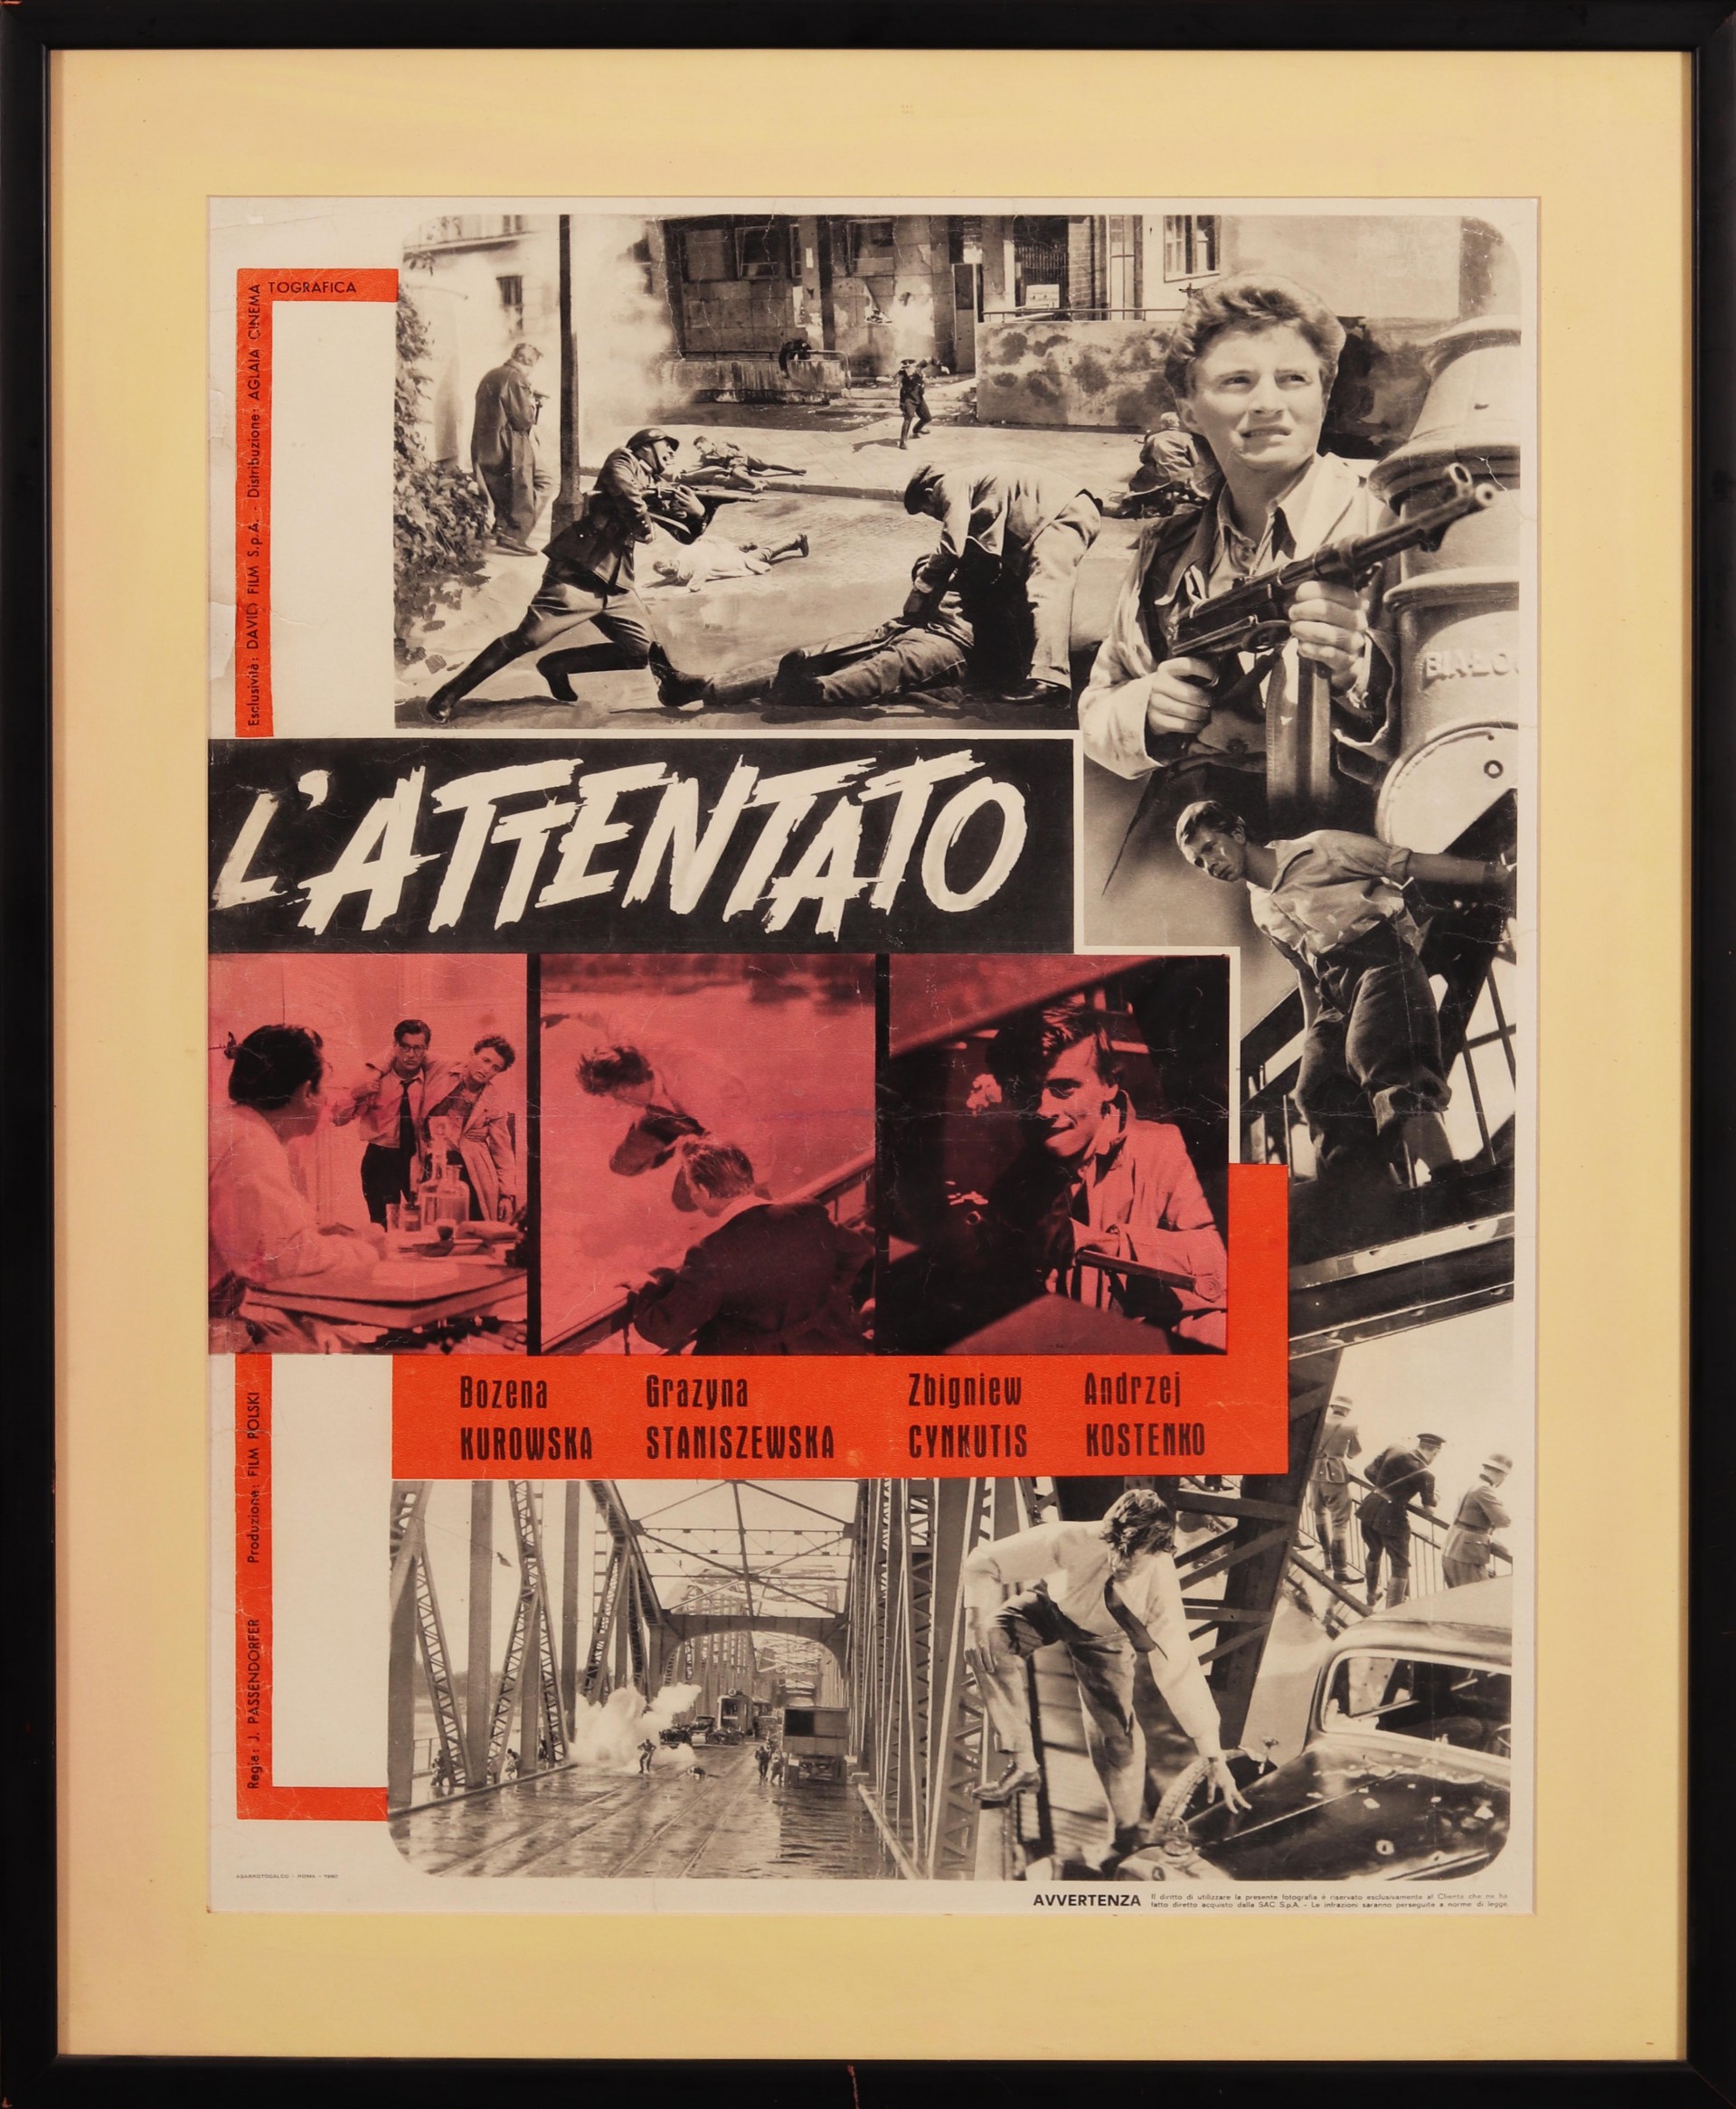 Cartaz do filme "L'Attentato" 